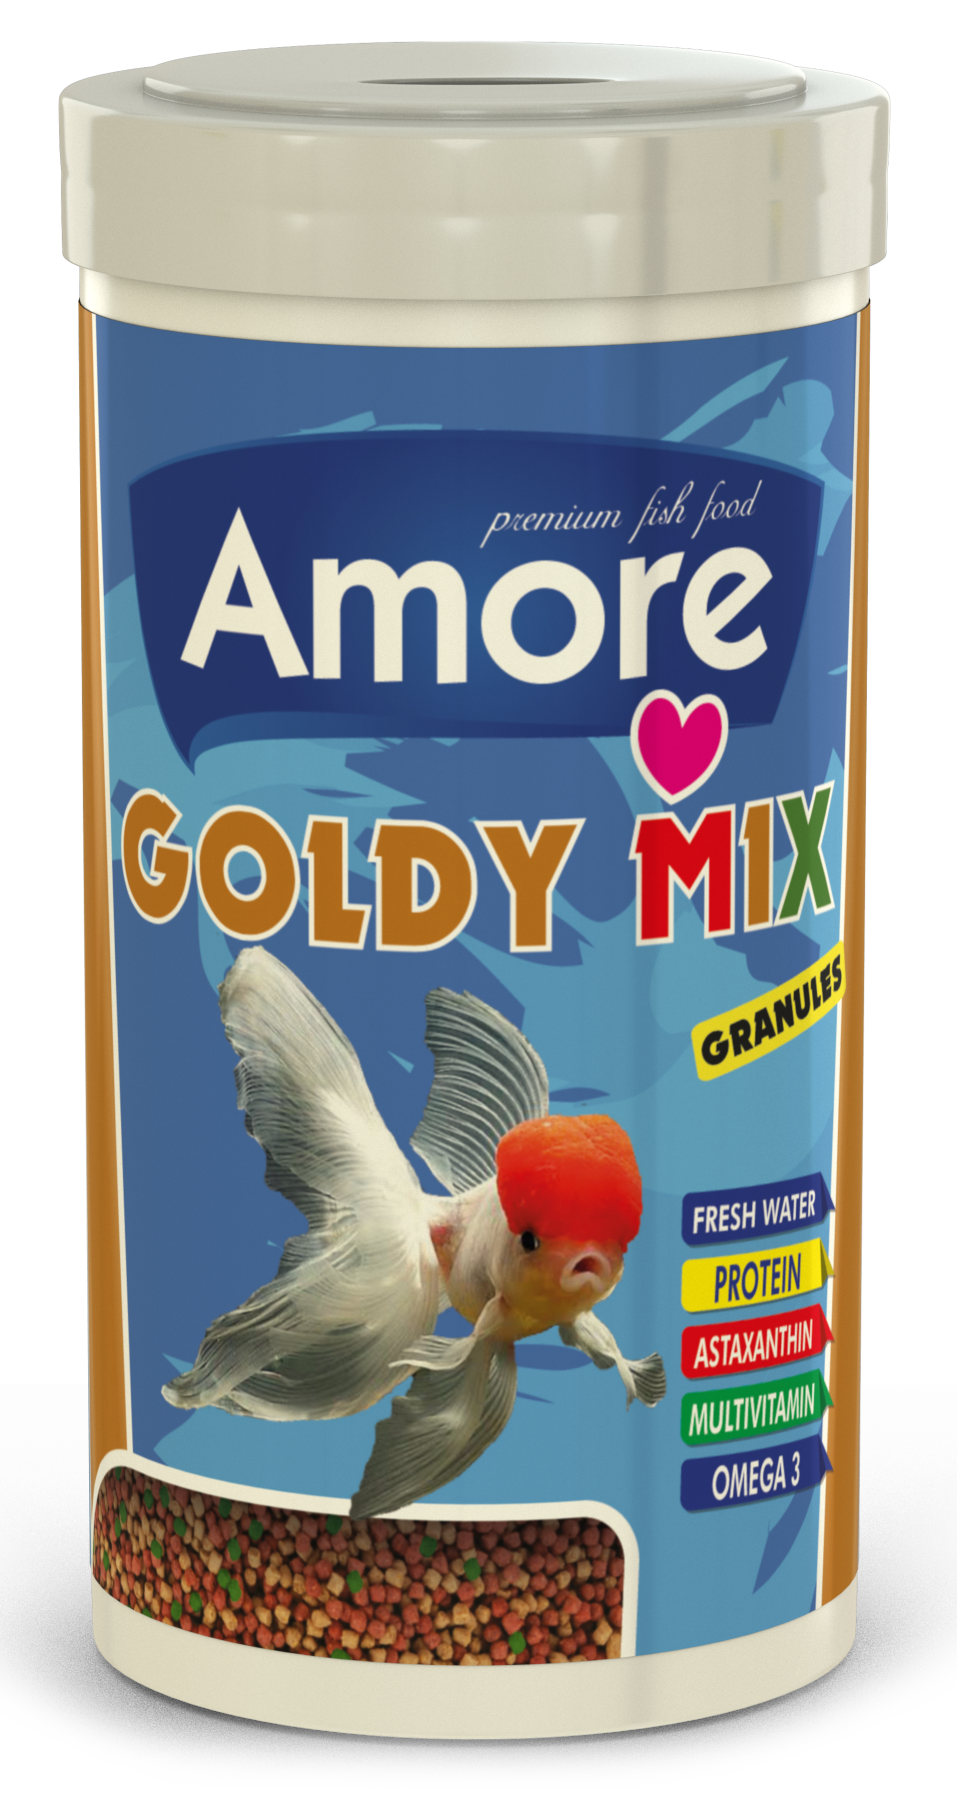 Amore Goldy Mix Granules ve Red 1000ml Japon Balığı Yemi, Vitamin